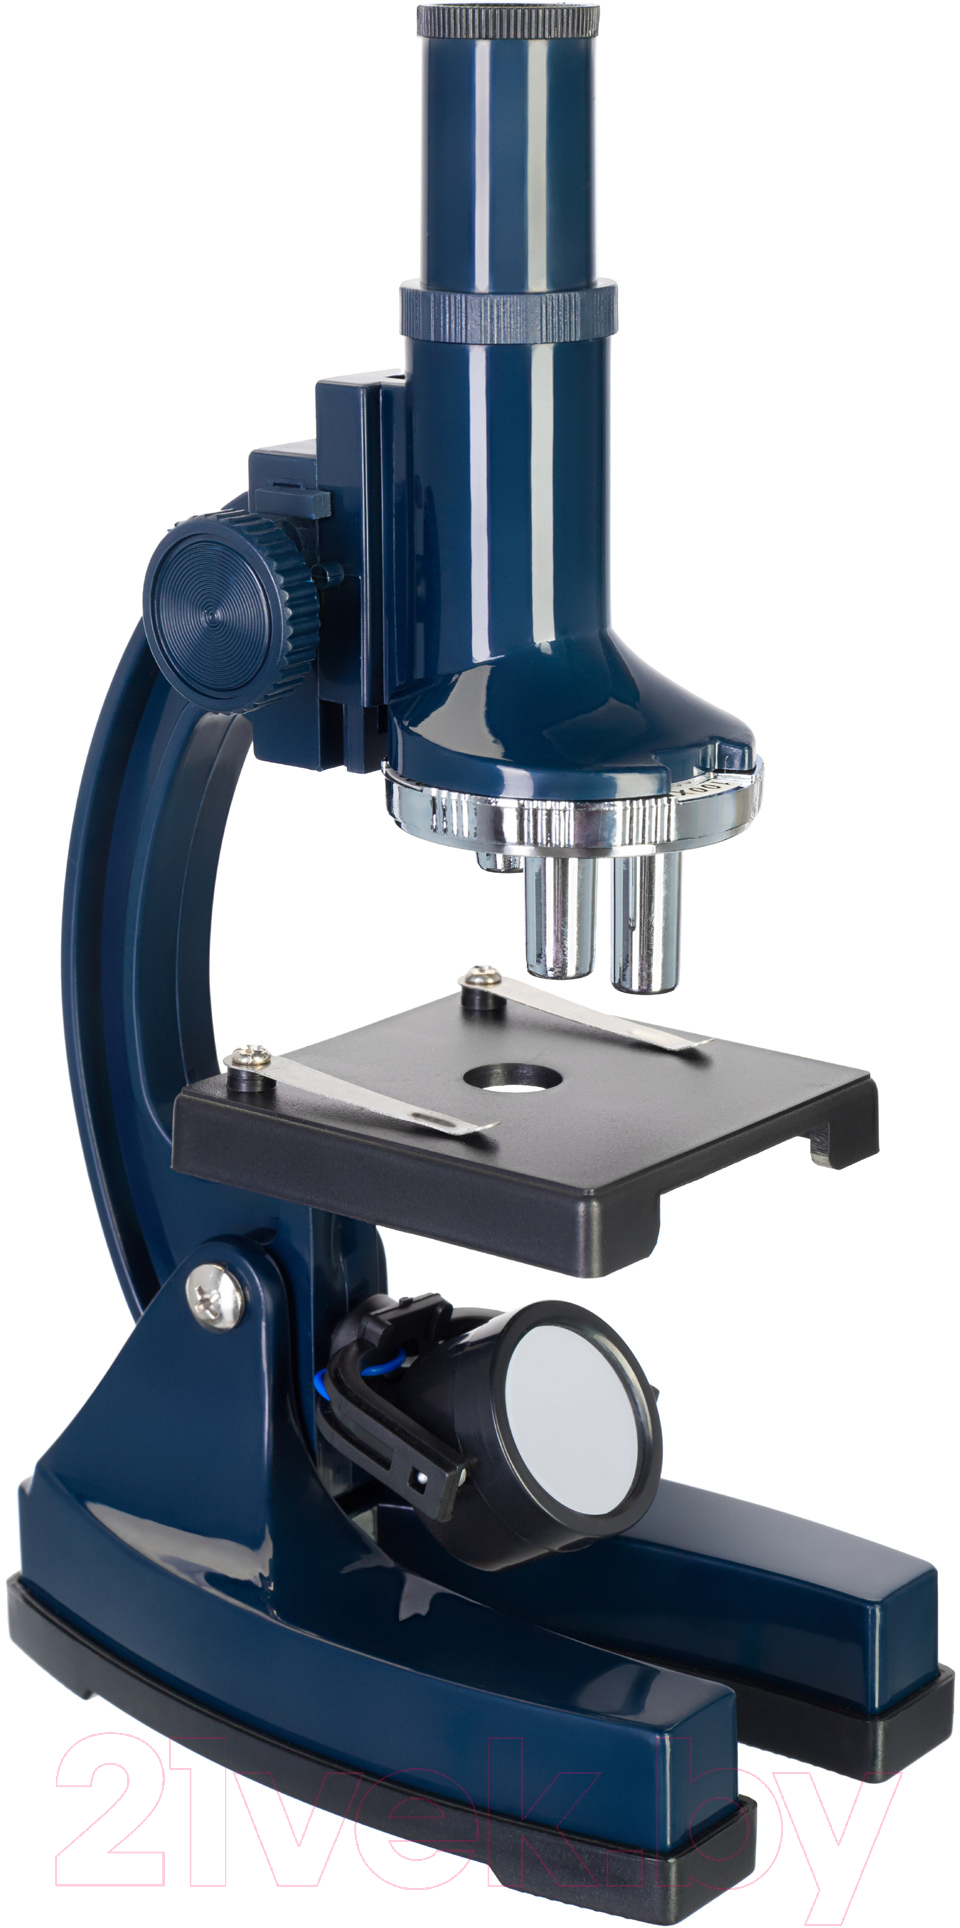 Микроскоп оптический Levenhuk Discovery Centi 02 с книгой / D78241